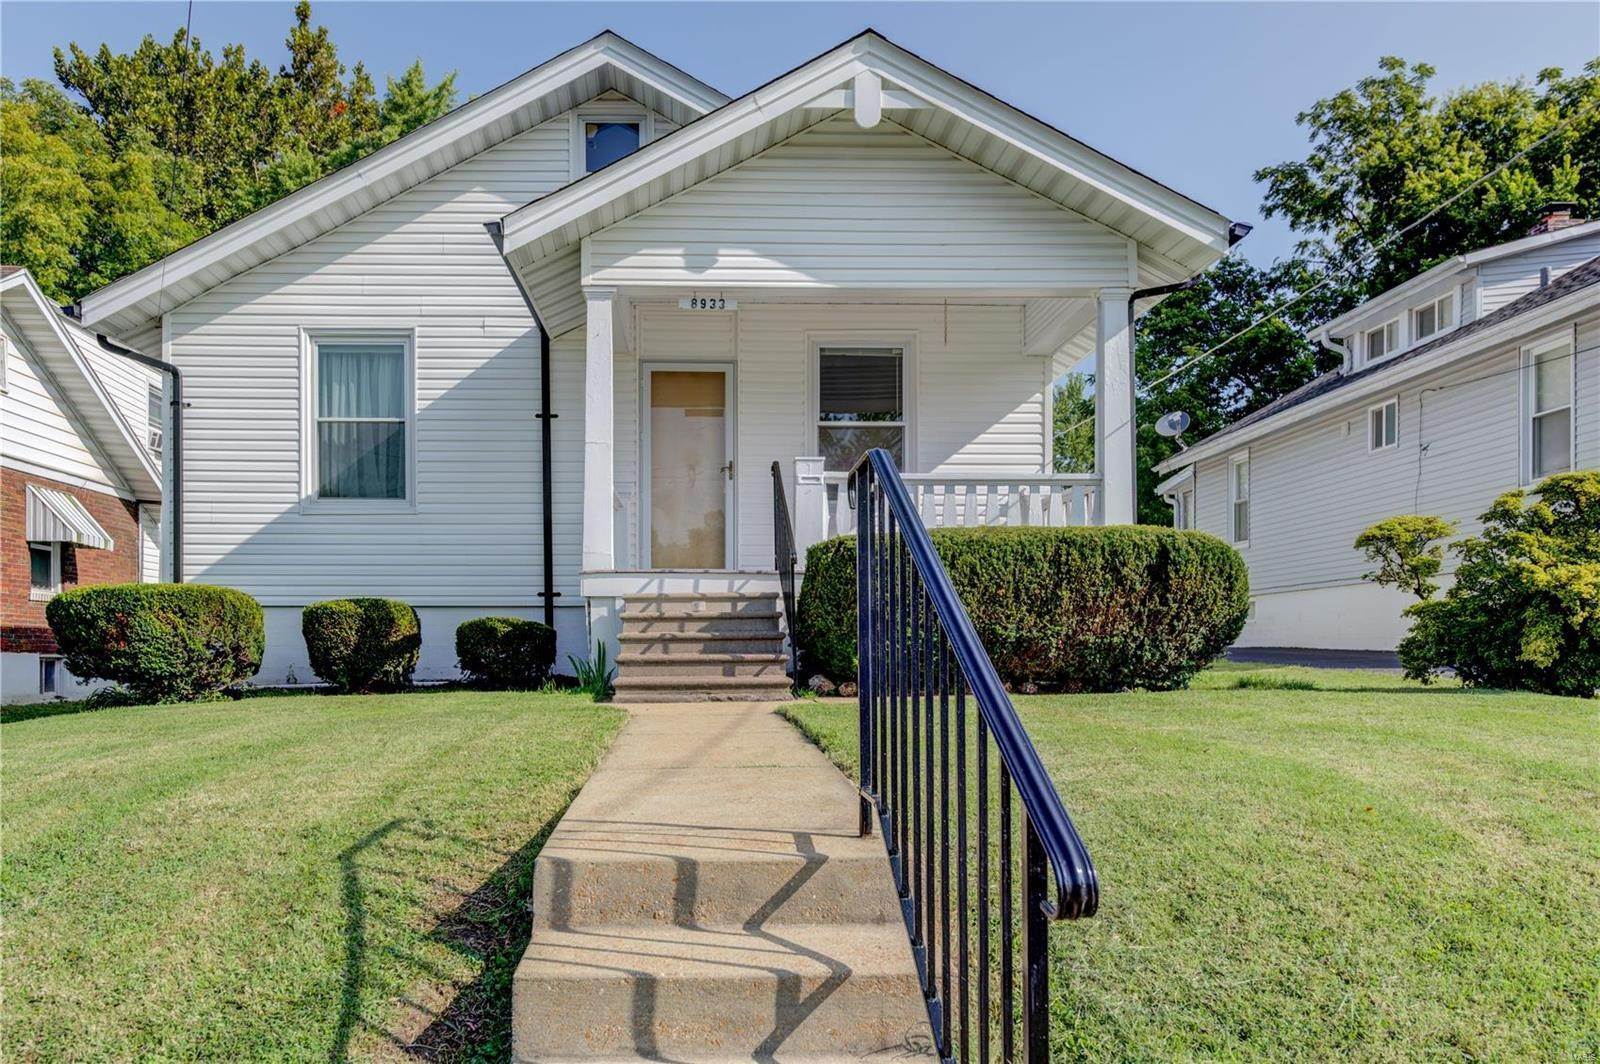 Property for Sale at 8933 Argyle Avenue St. Louis, Missouri 63114 United States